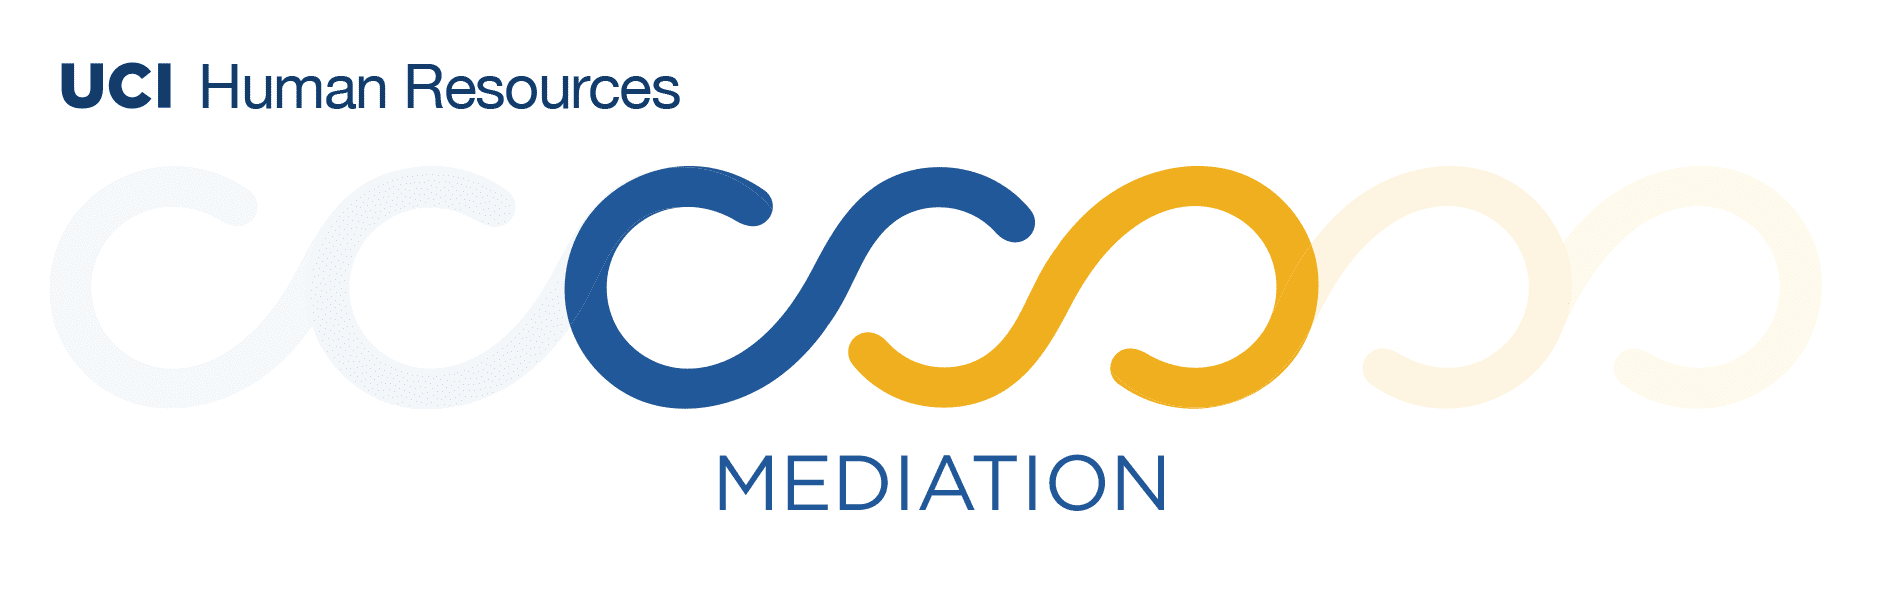 UCI Human Resources Meditation